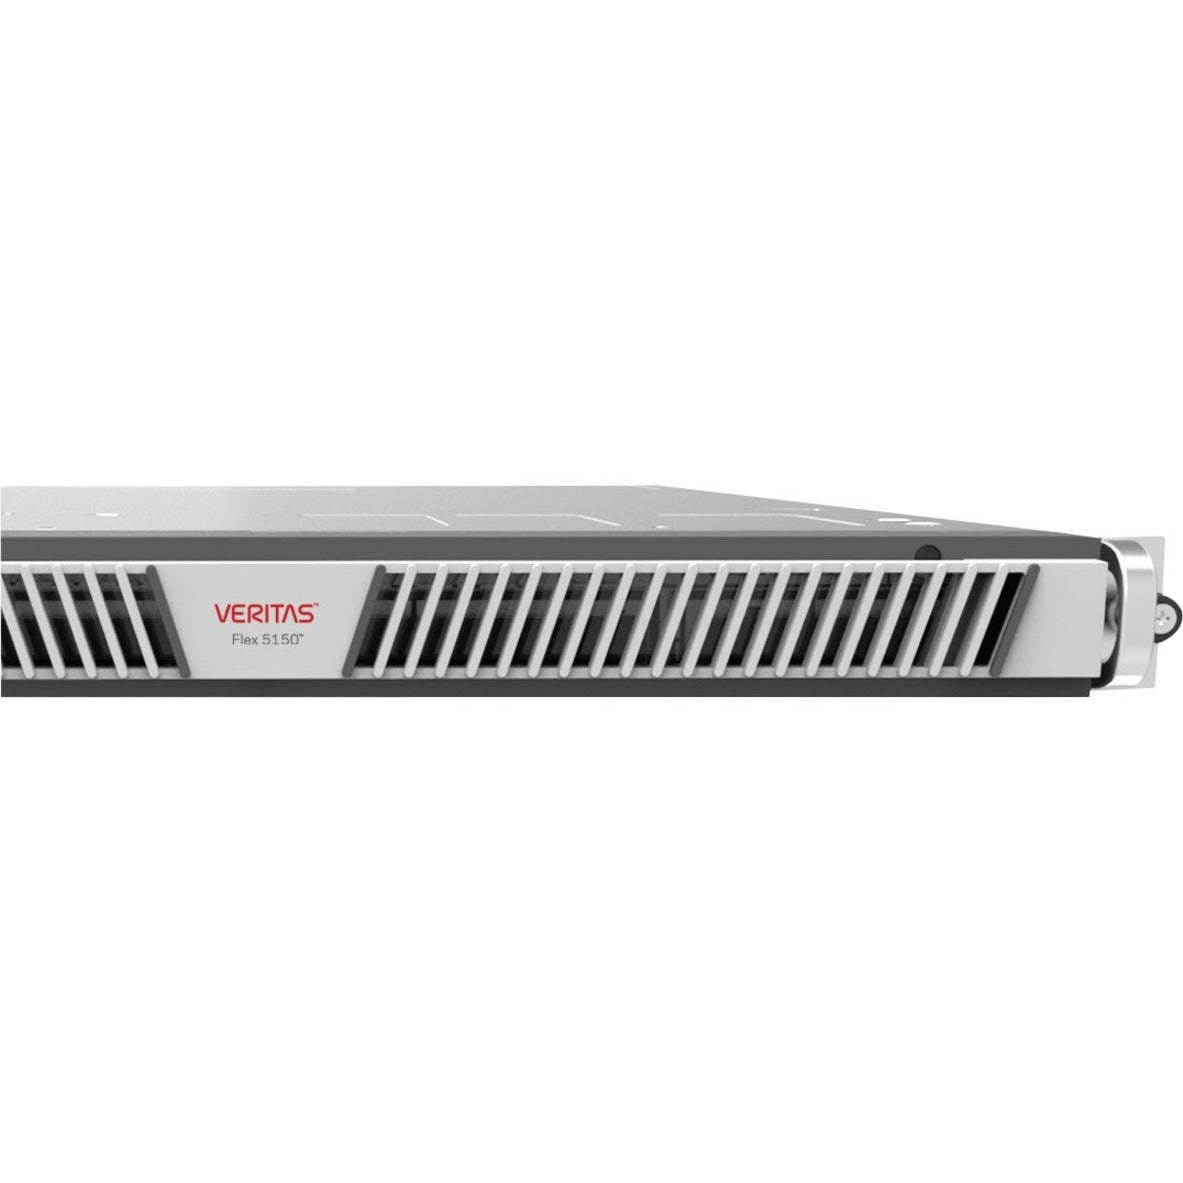 Veritas 26117-M0022 Flex System 5150 NAS Storage System, 15TB Total Hard Drive Capacity Installed, 12Gb/s SAS Controller, 6 Network (RJ-45) Ports